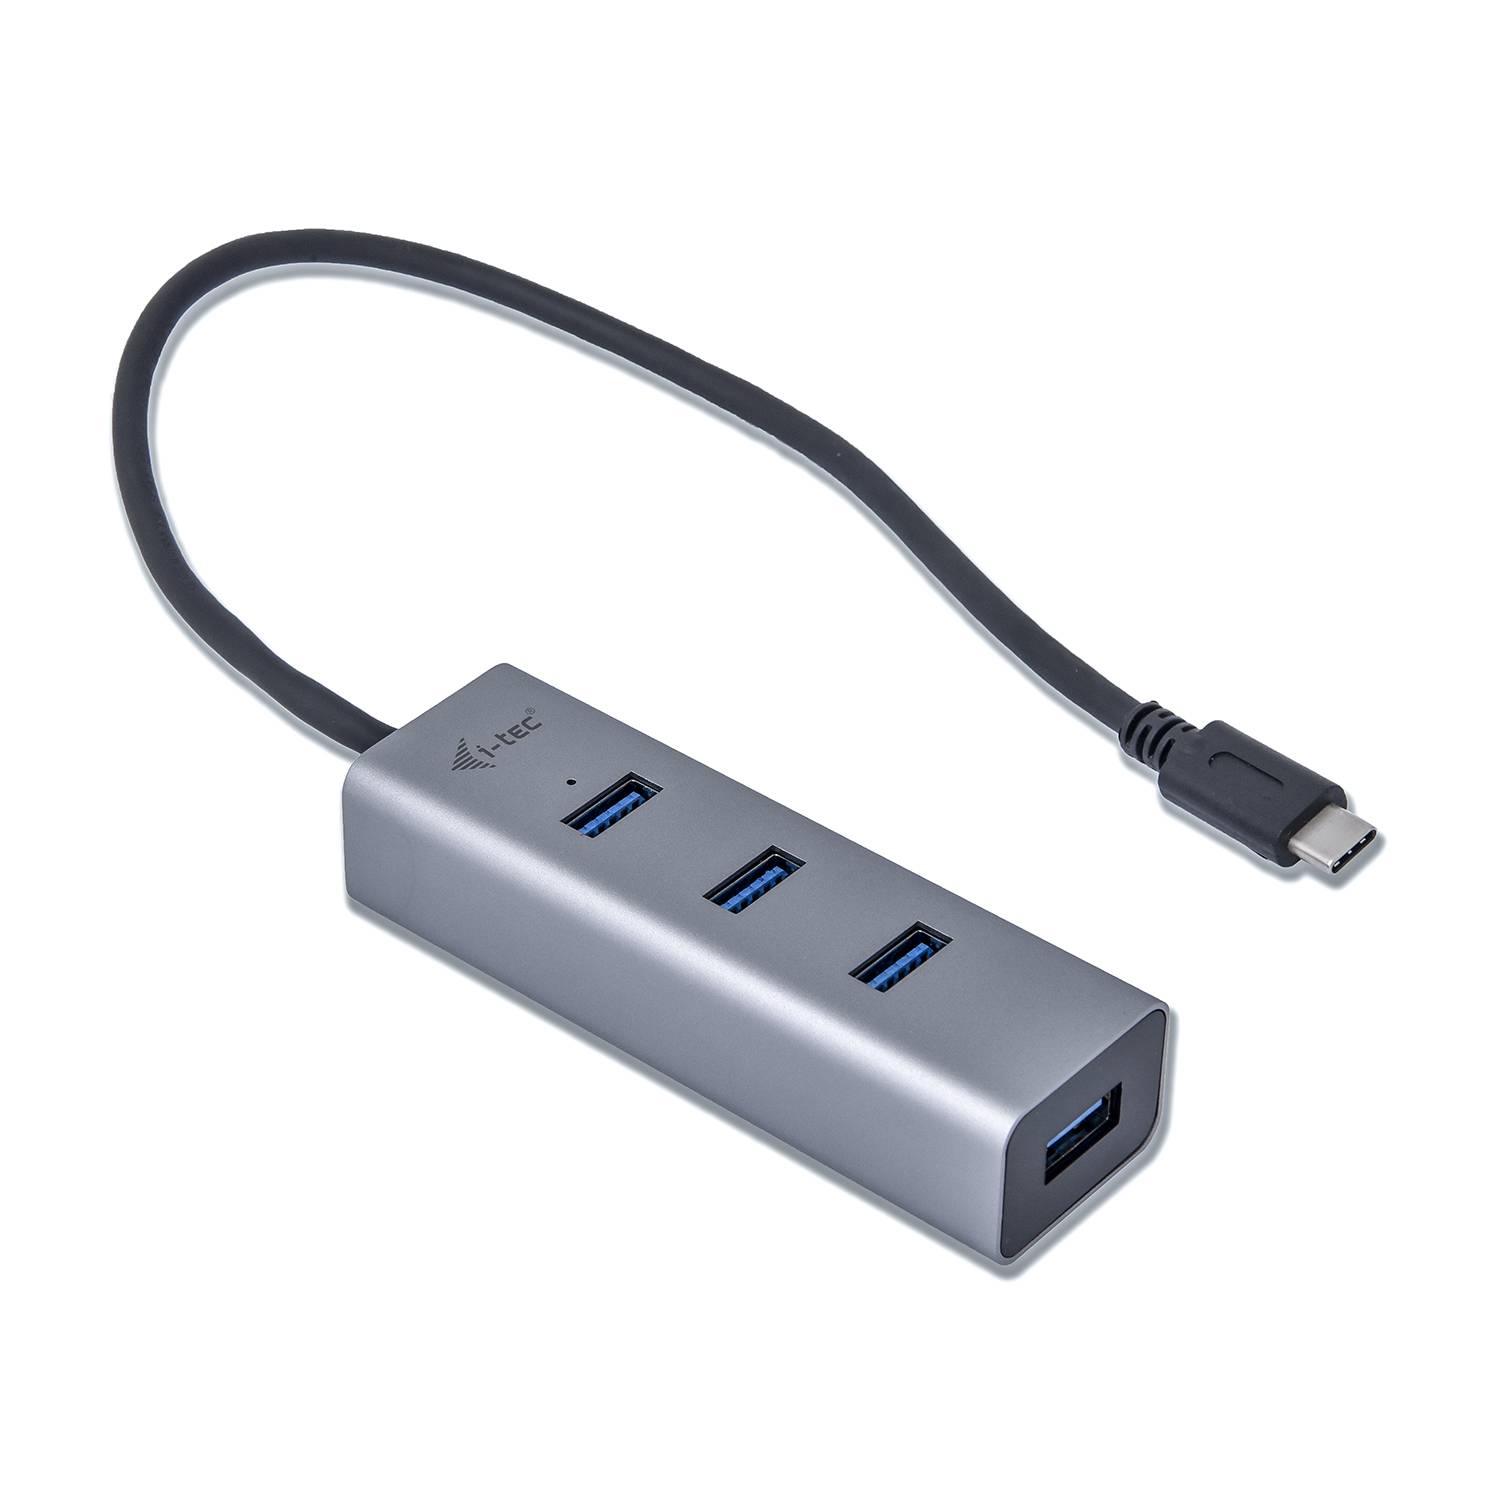 Rca Informatique - image du produit : I-TEC USB-C METAL 4-PORT HUB I-TEC USB-C METAL 4-PORT HUB